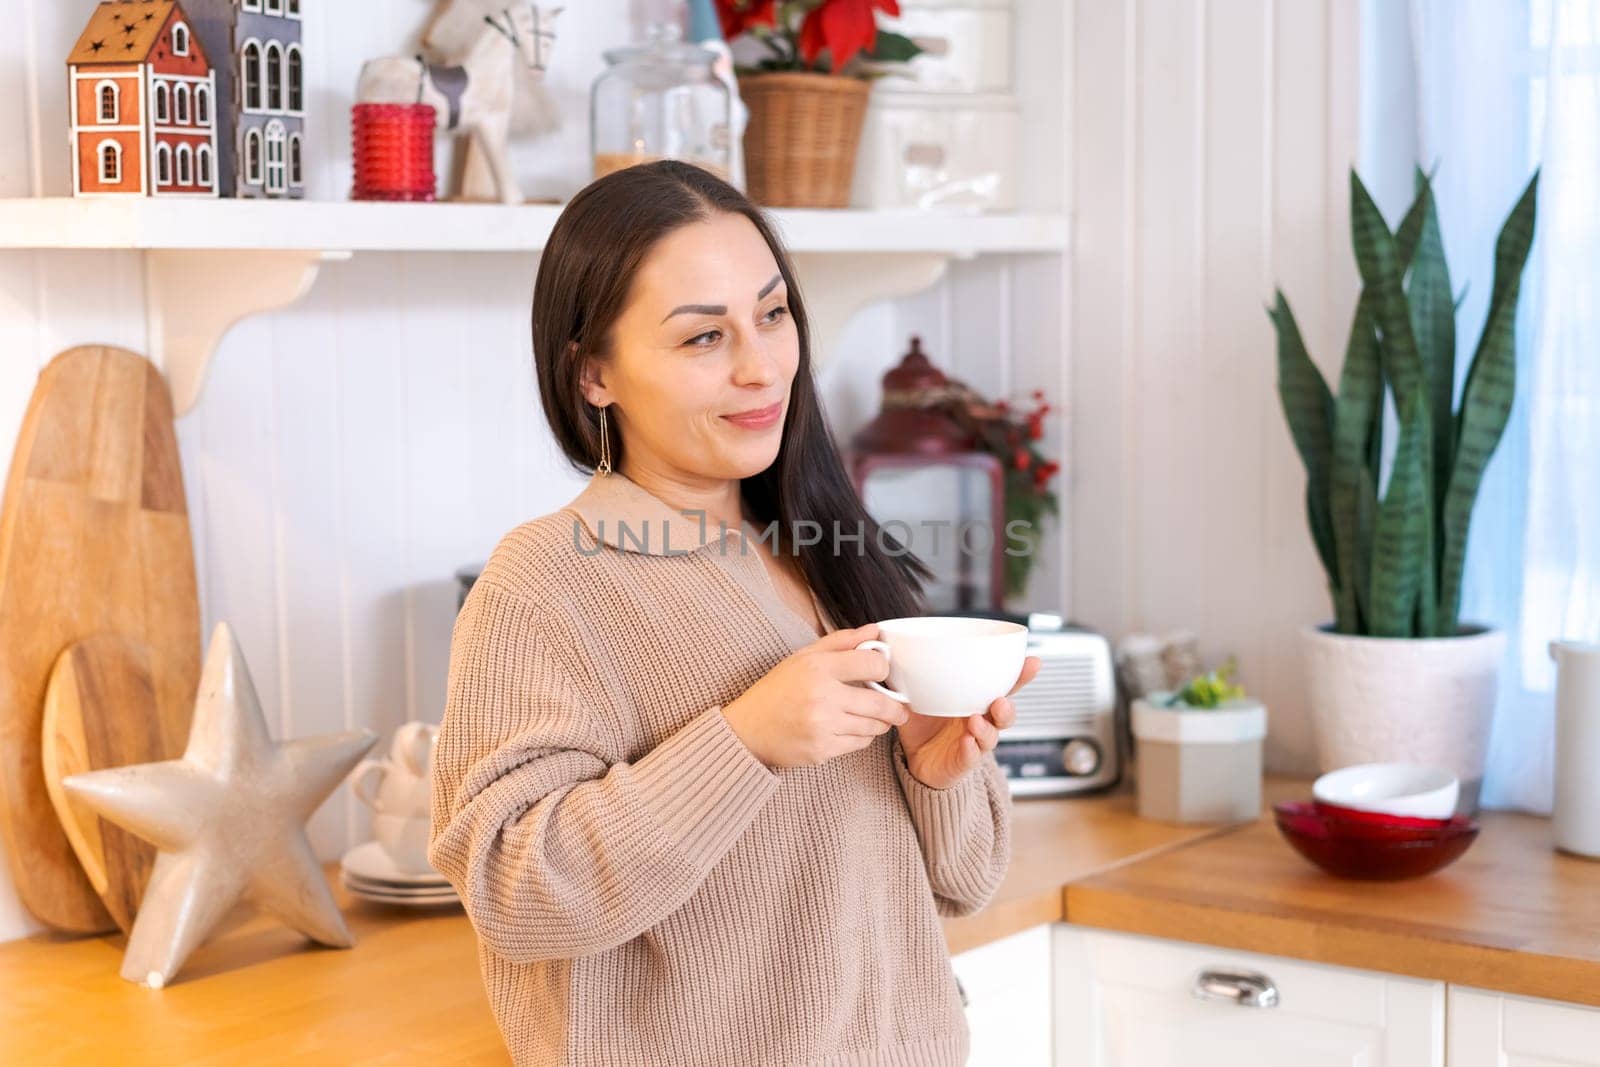 Concept festive Christmas atmosphere, cute woman drinking tea or coffee by EkaterinaPereslavtseva